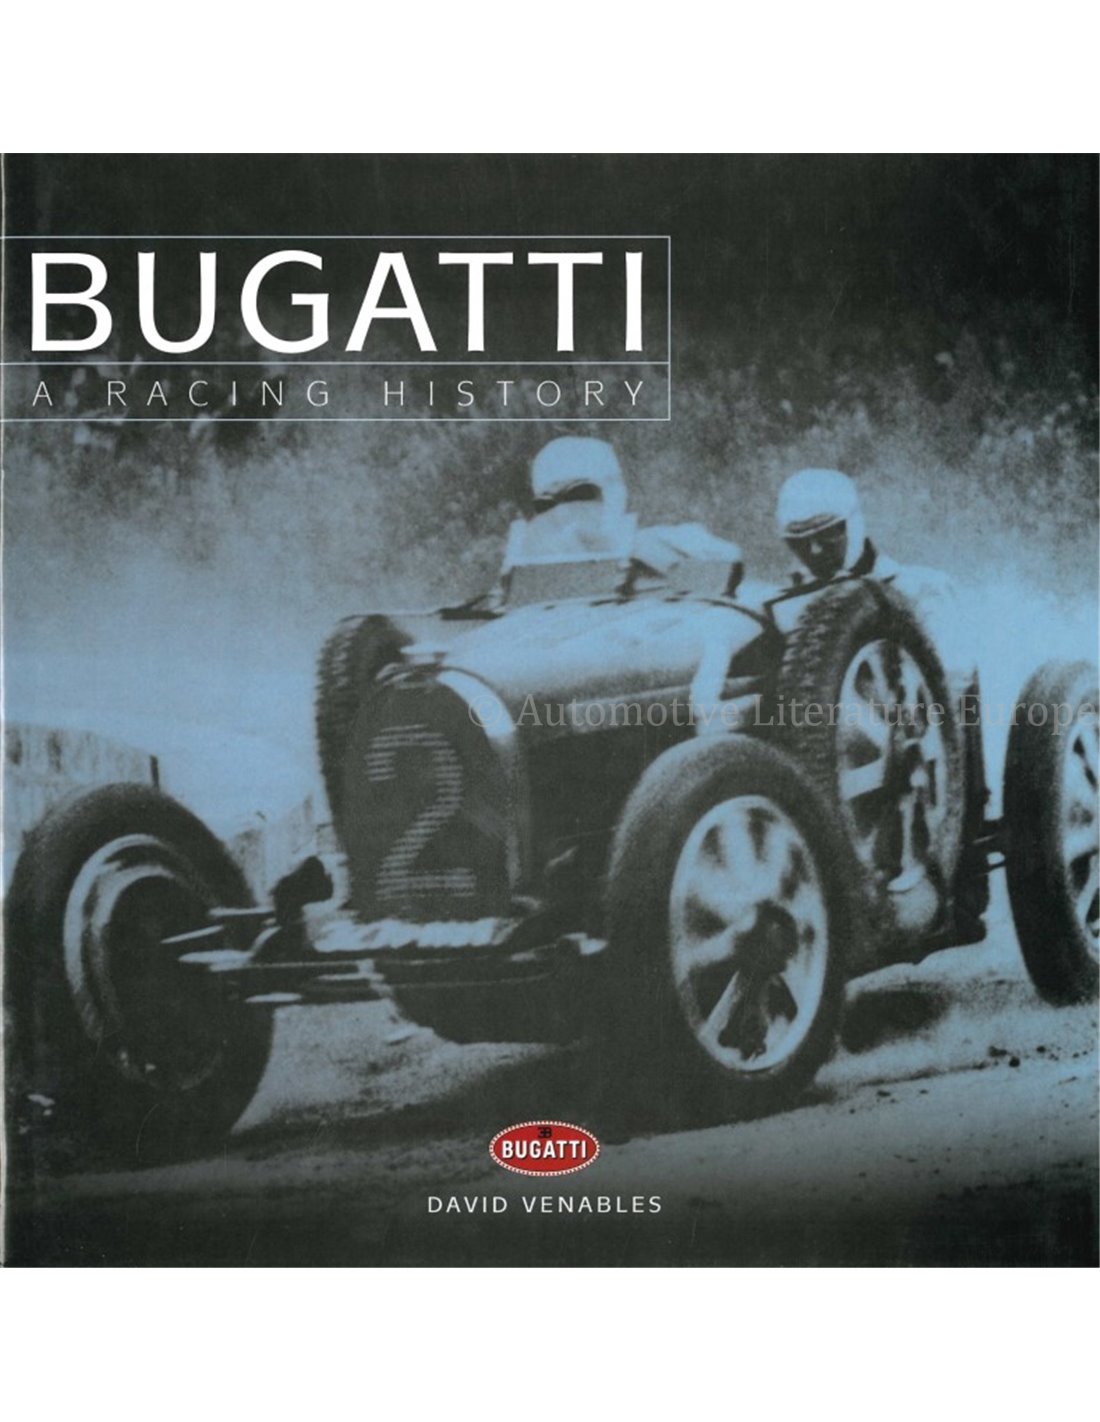 BUGATTI, A RACING HISTORY